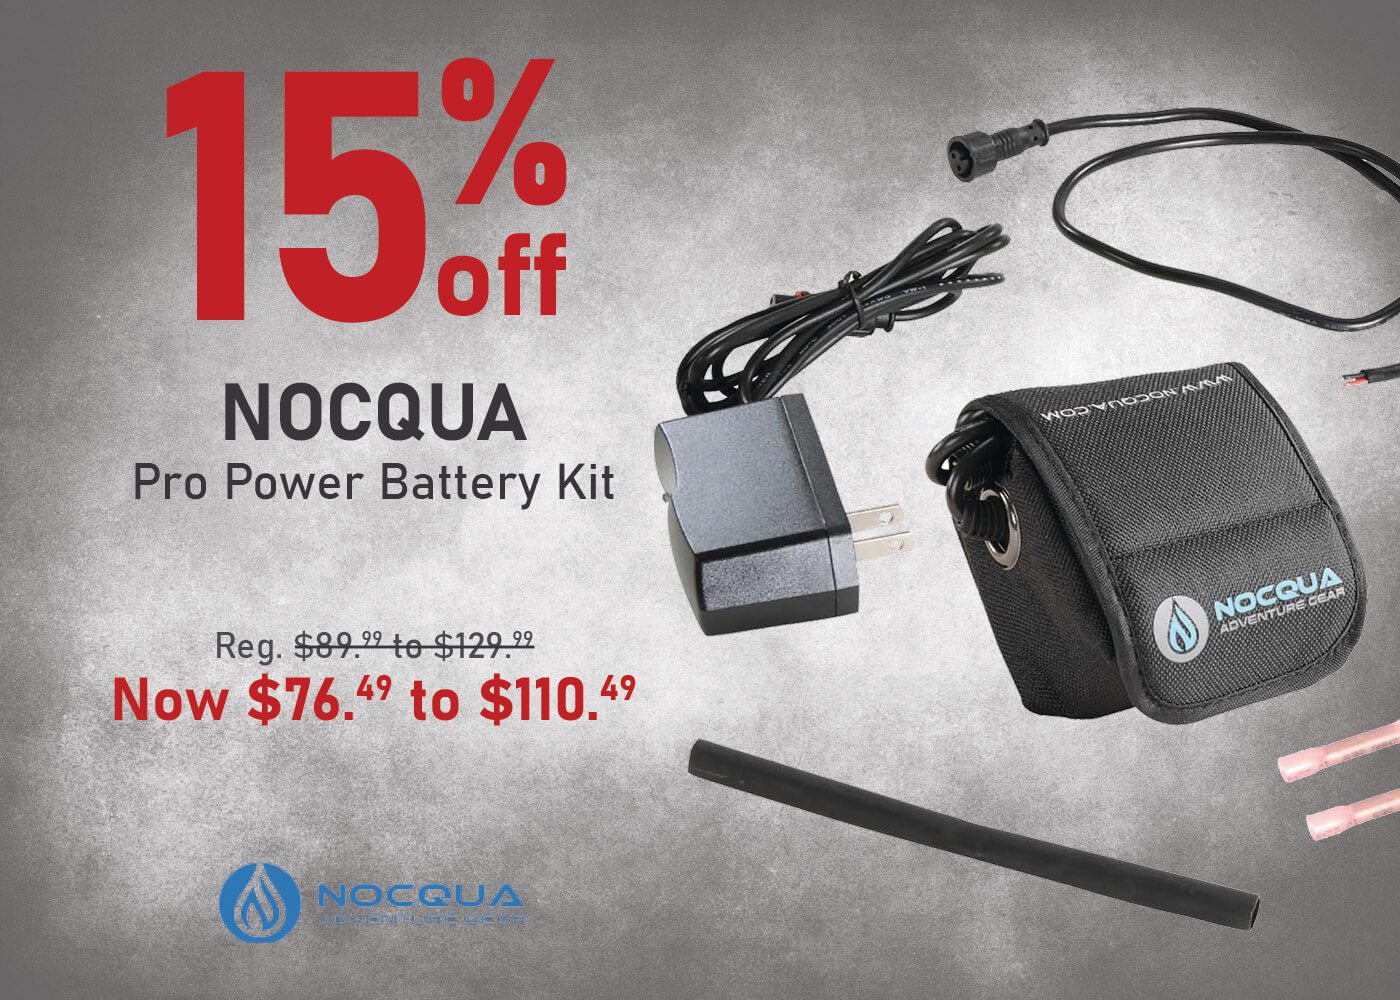 Take 15% off the NOCQUA Pro Power Battery Kit